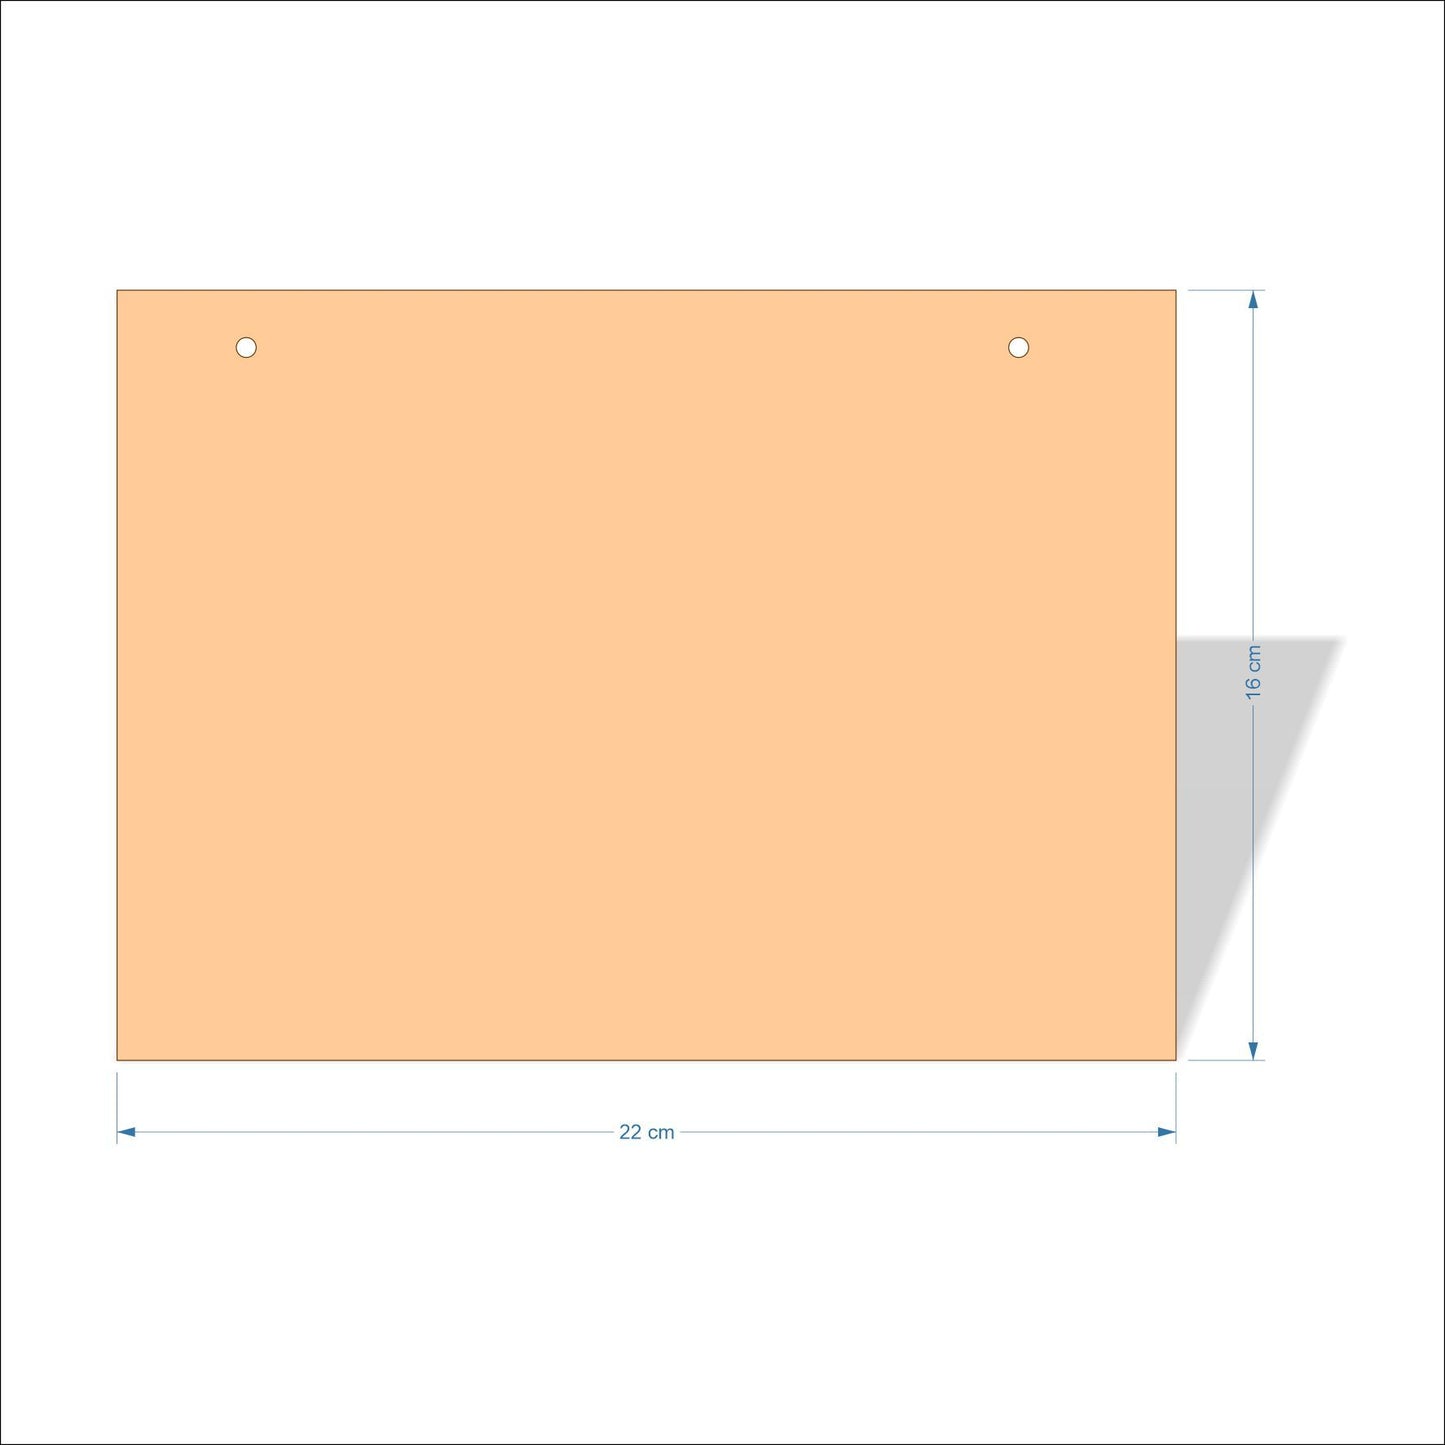 22 cm X 16 cm 3mm MDF Plaques with square corners